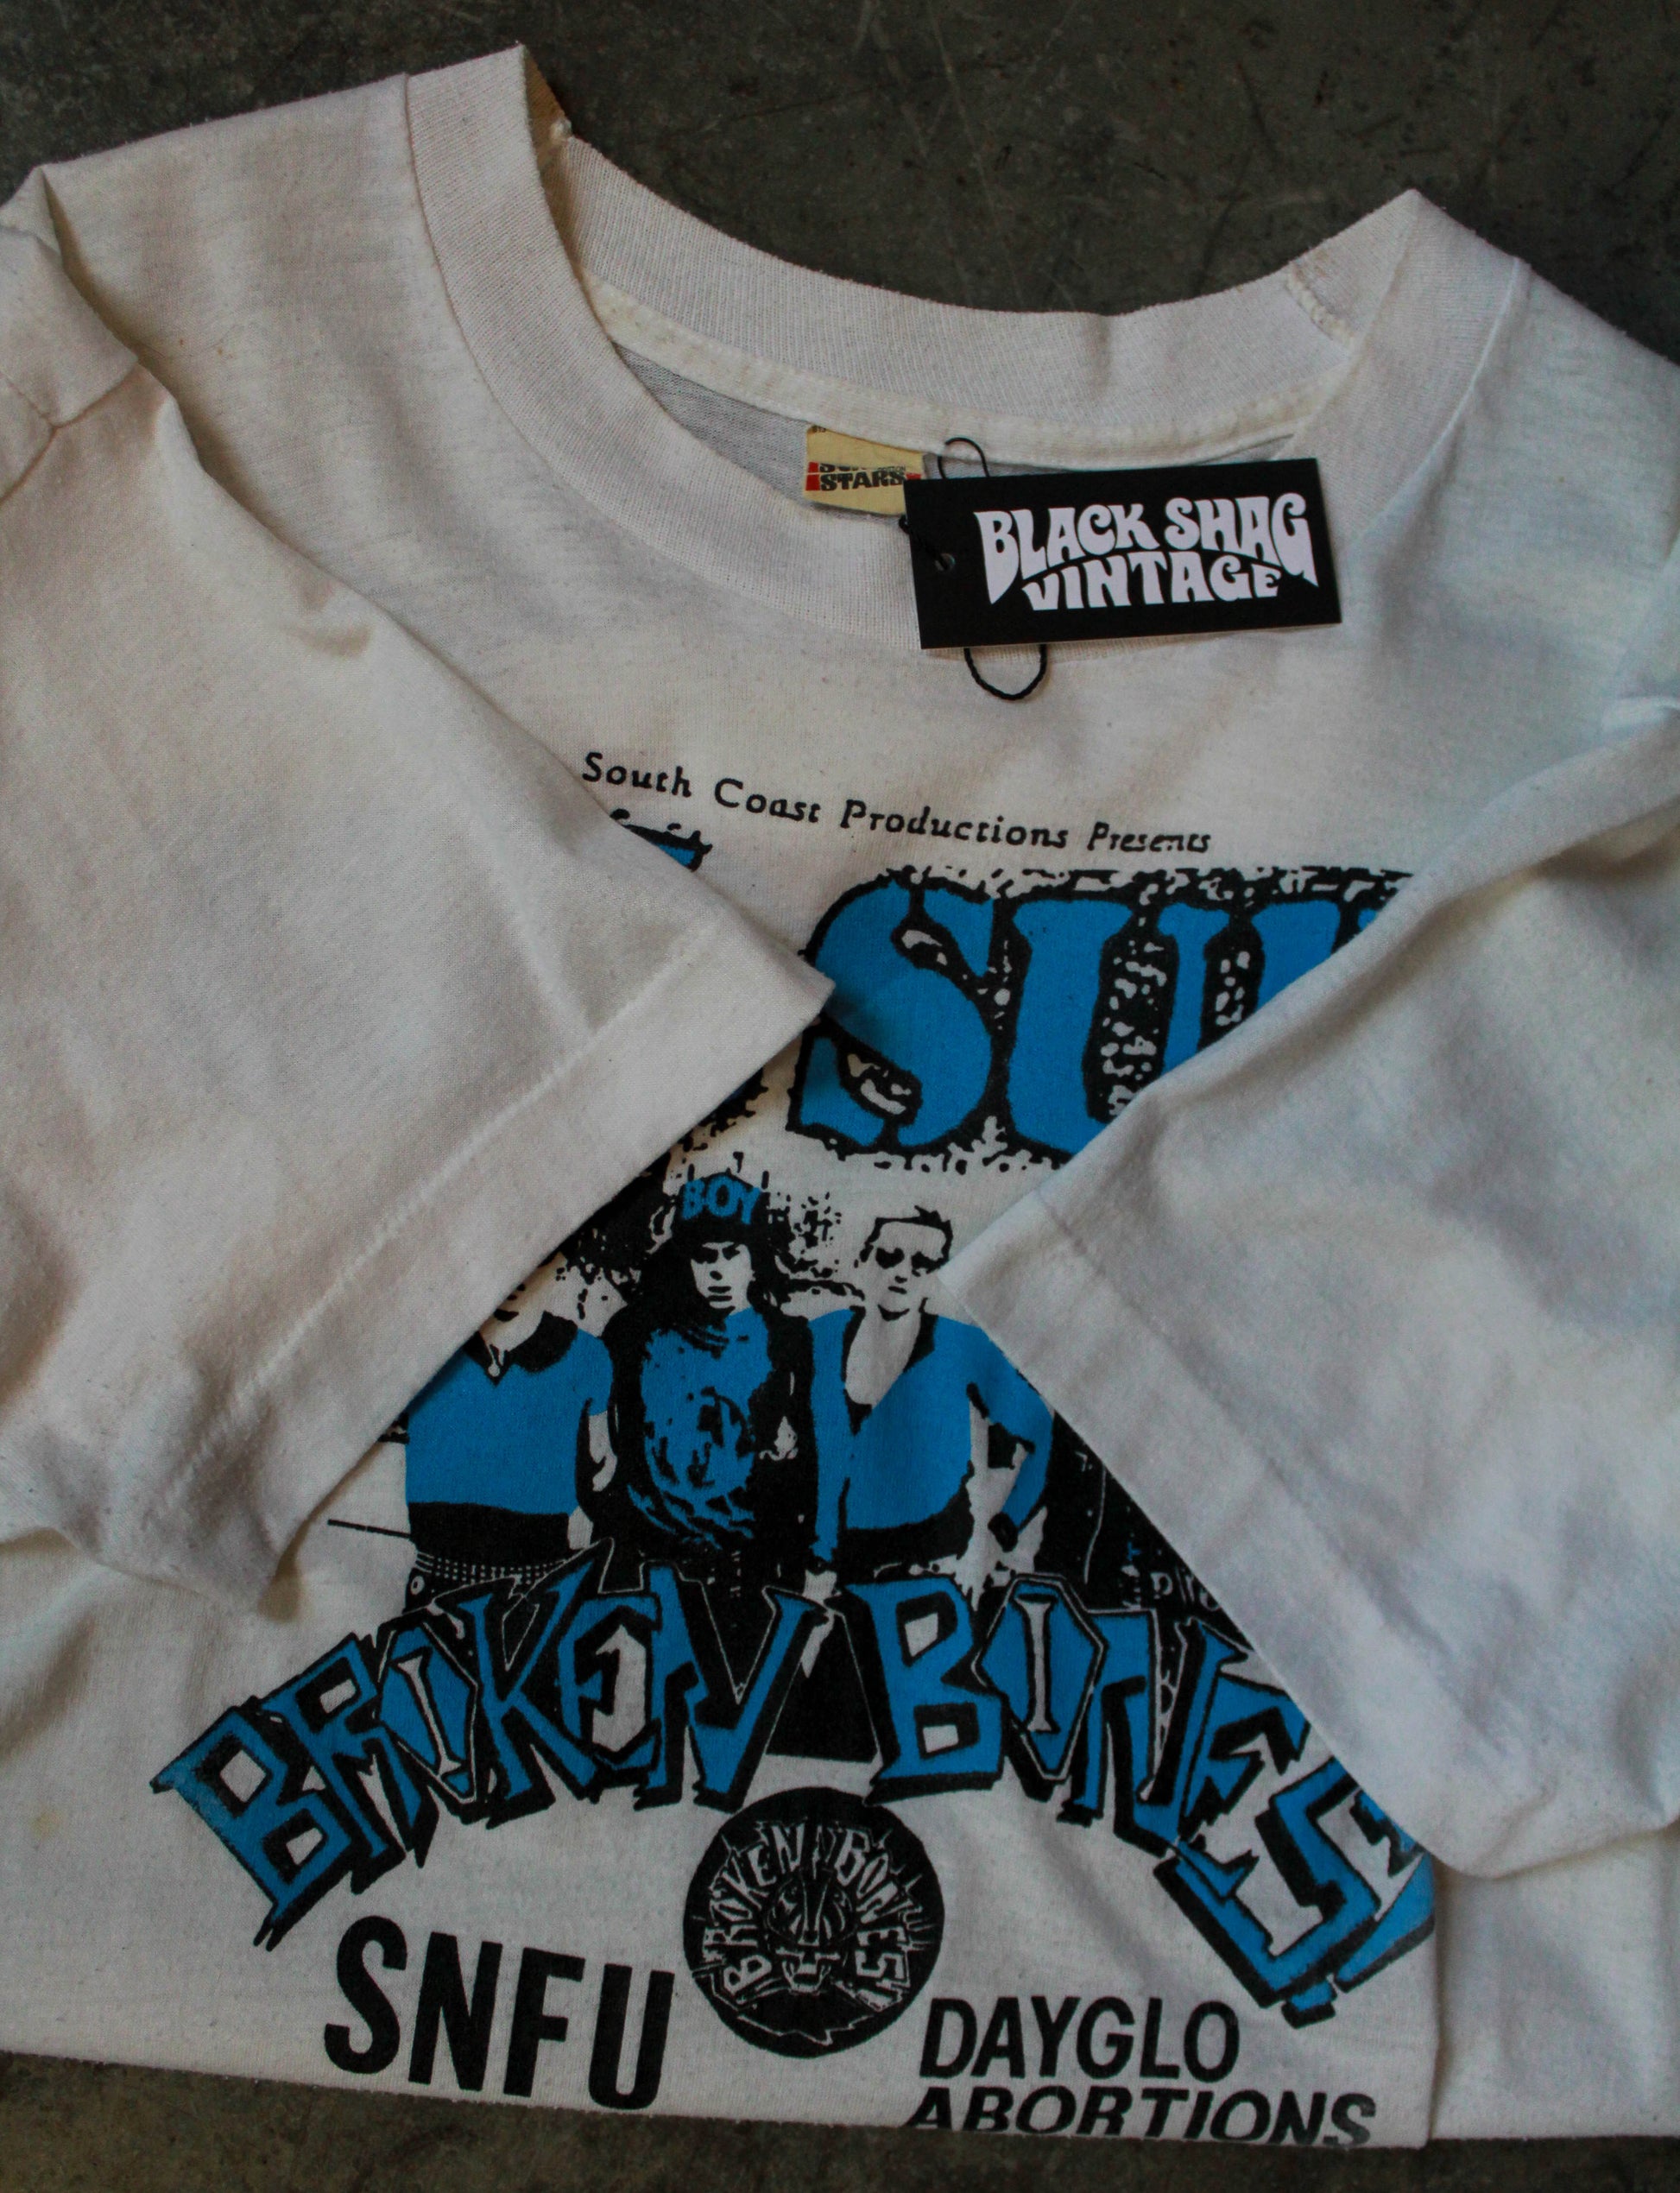 Vintage 80's UK Subs Concert T Shirt Broken Bones Punk Rock Event White Unisex Medium